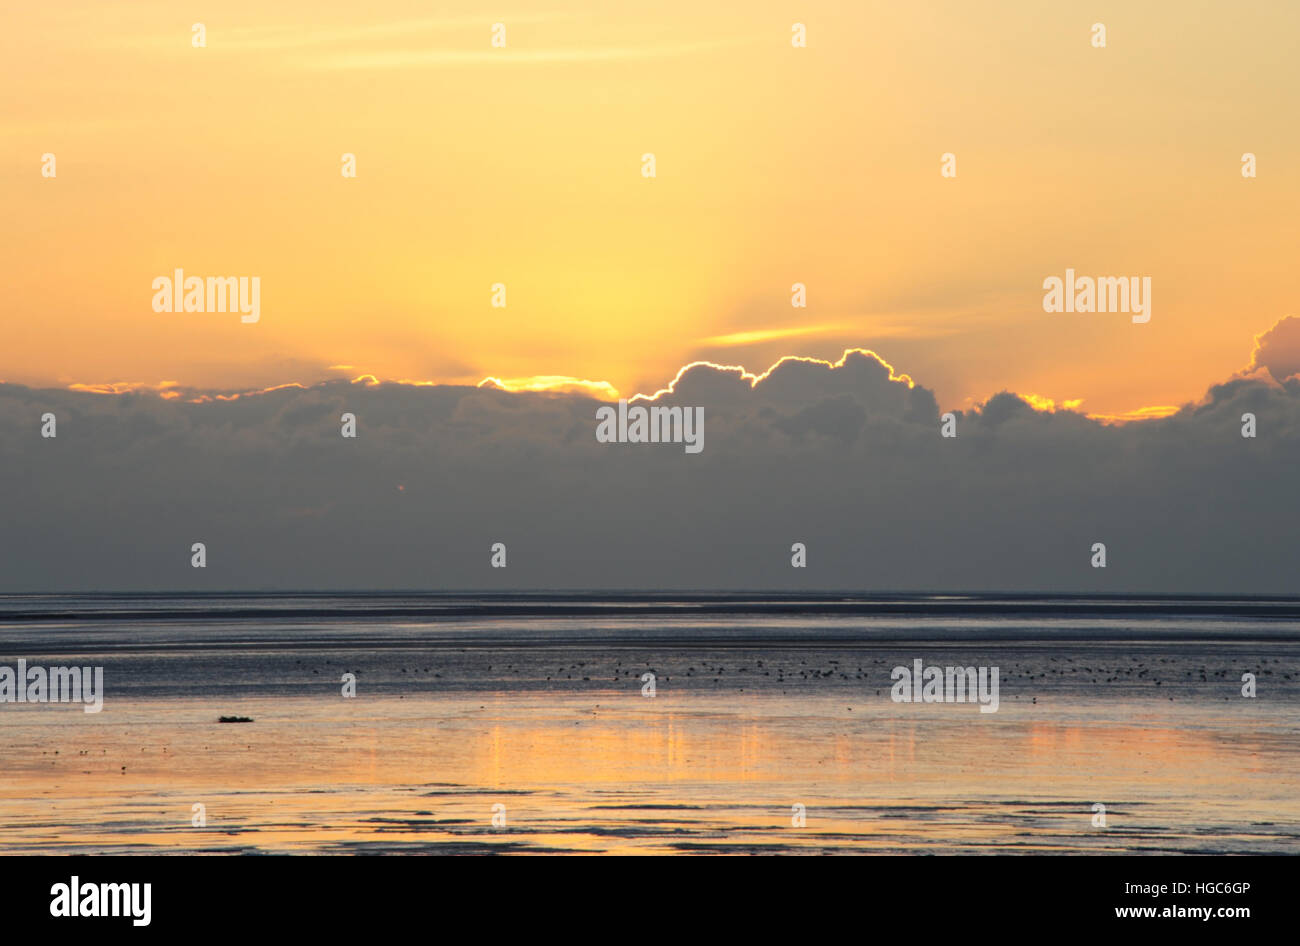 Wet sand beach view towards yellow orange sky with sunset rays rising above grey cumulonimbus clouds, St Annes, Lancashire, UK Stock Photo